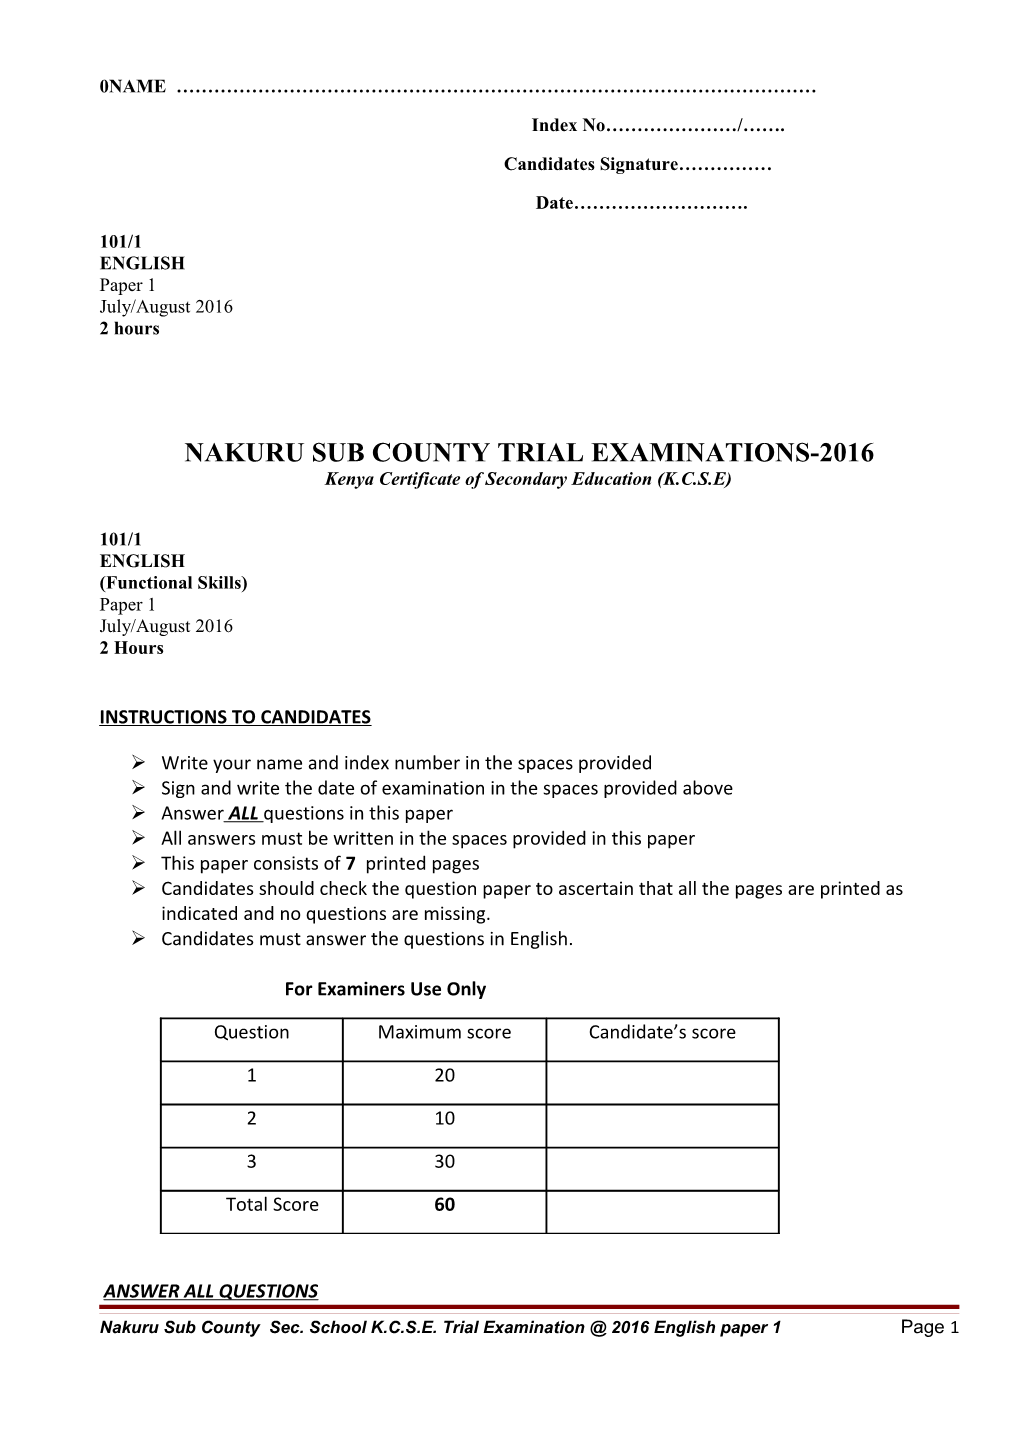 Nakuru Sub County Trial Examinations-2016